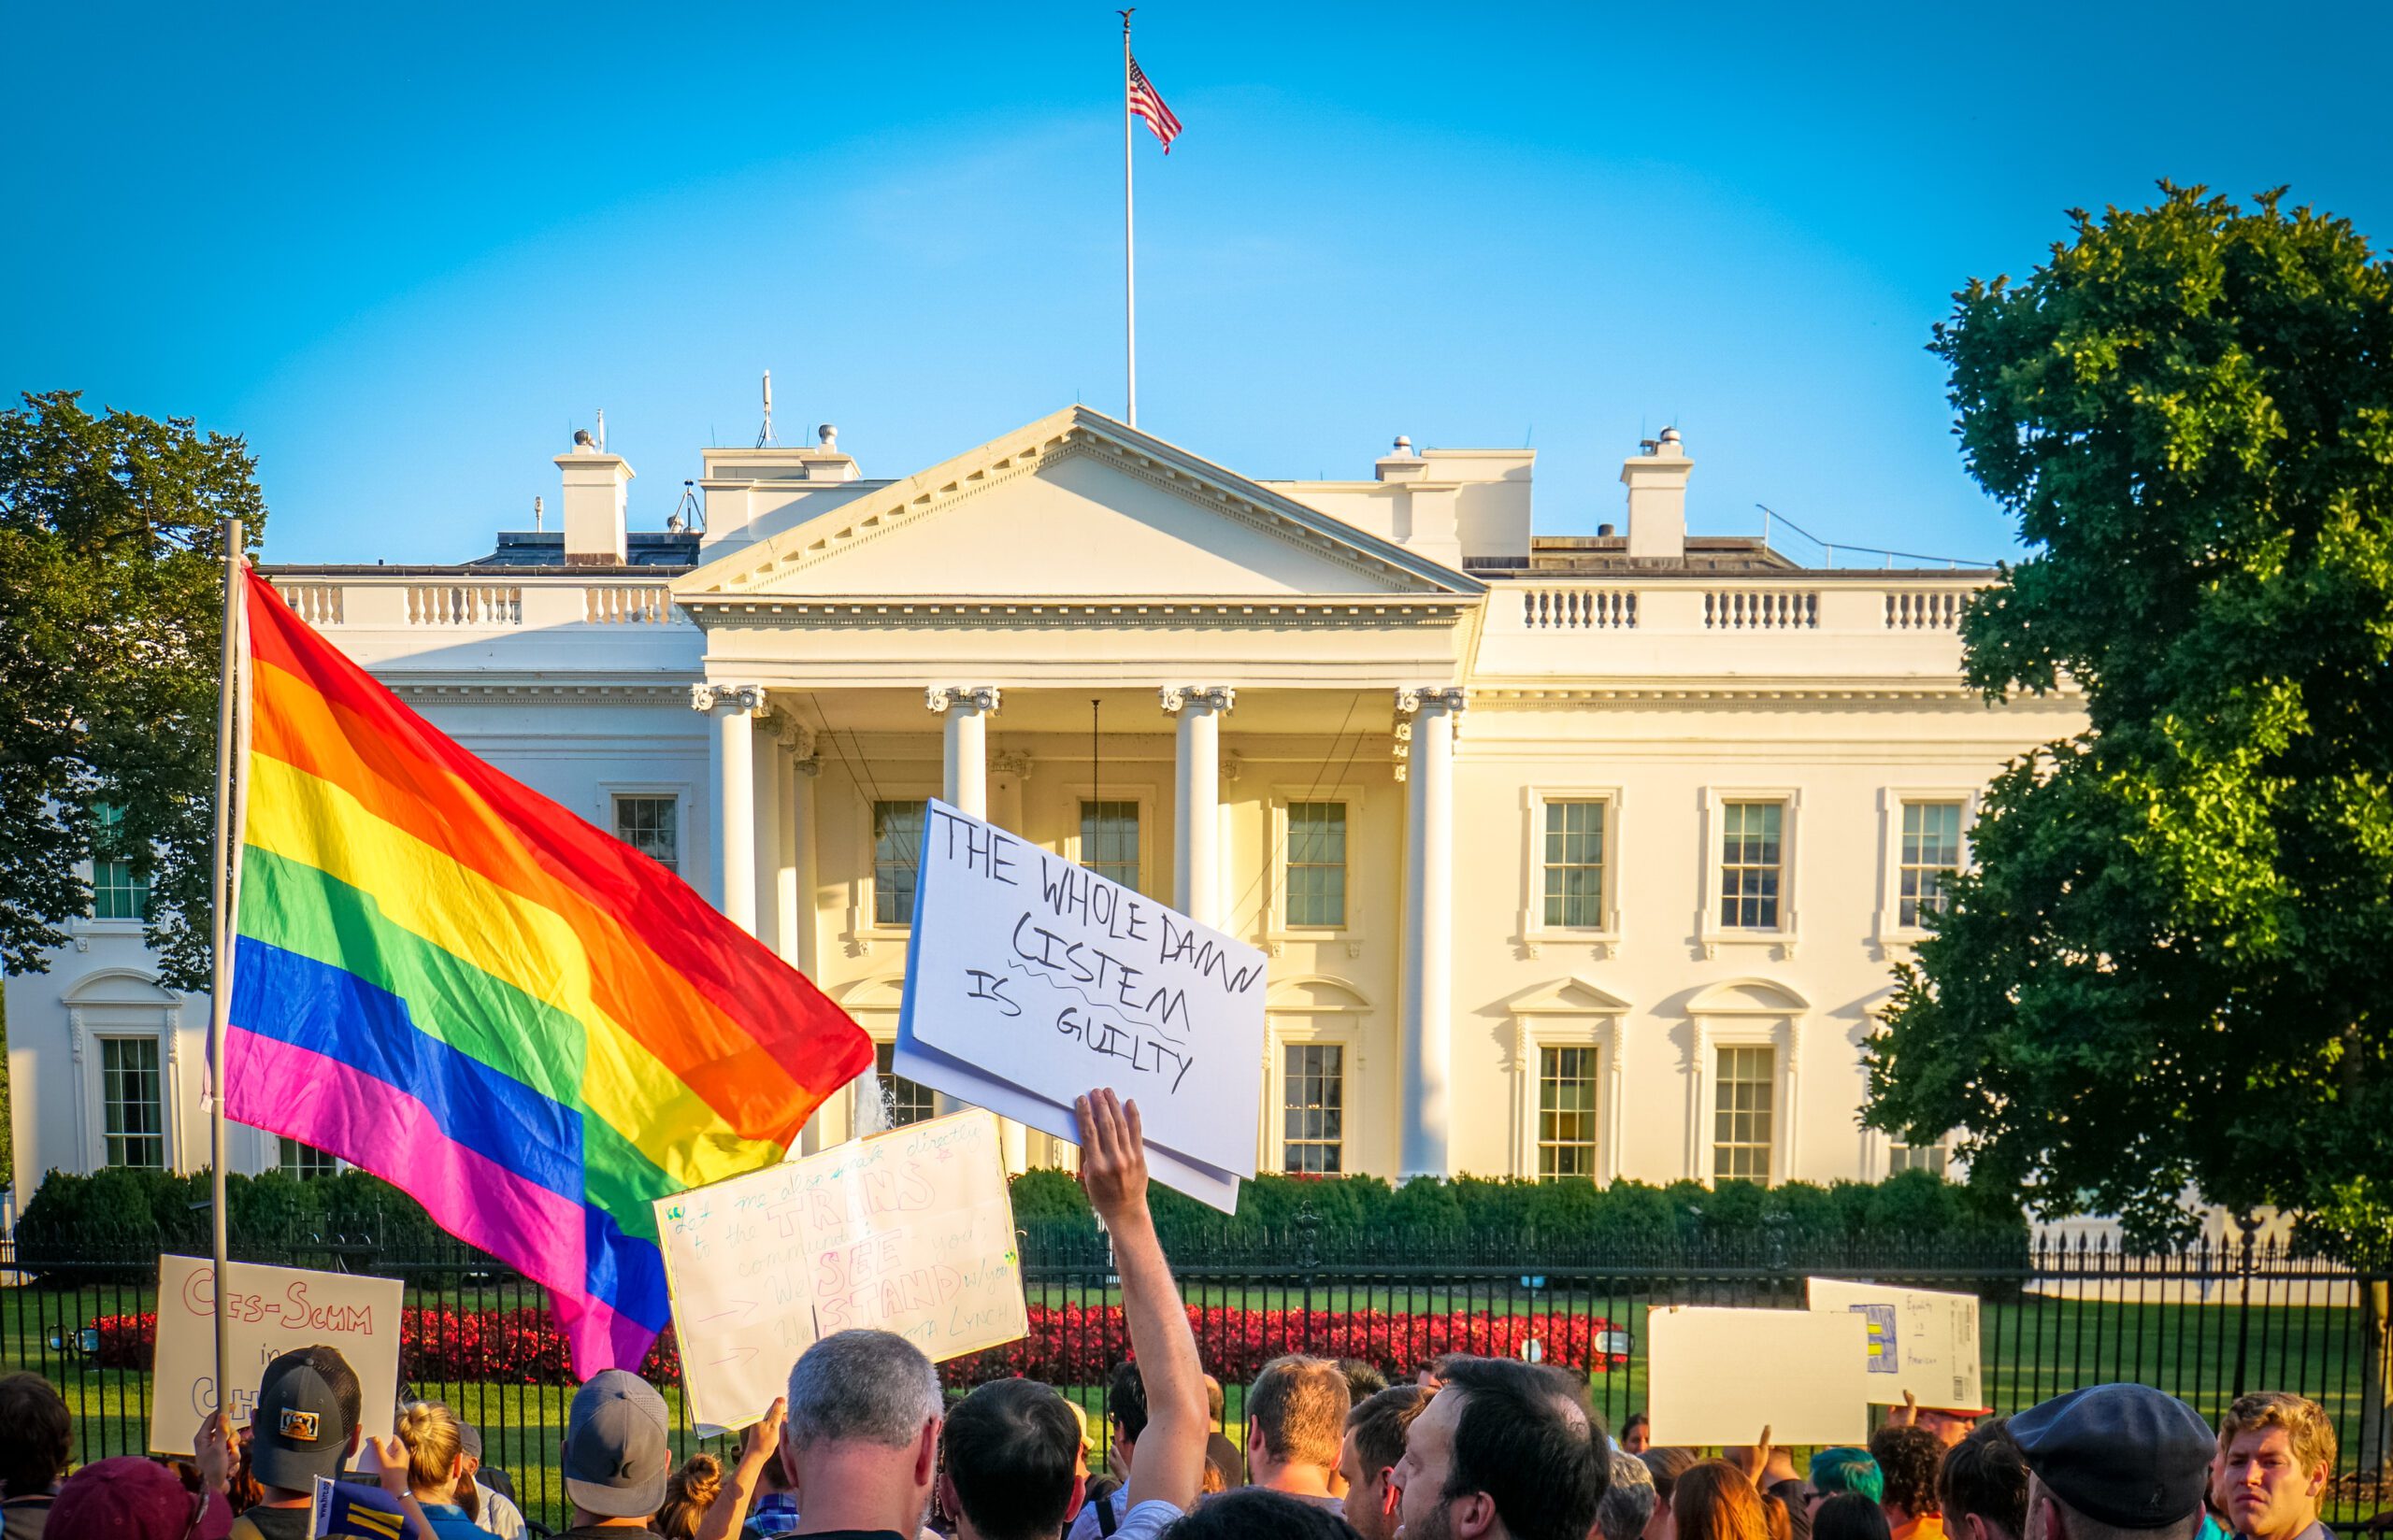 LGBTQIA droits fondamentaux menacés aux USA